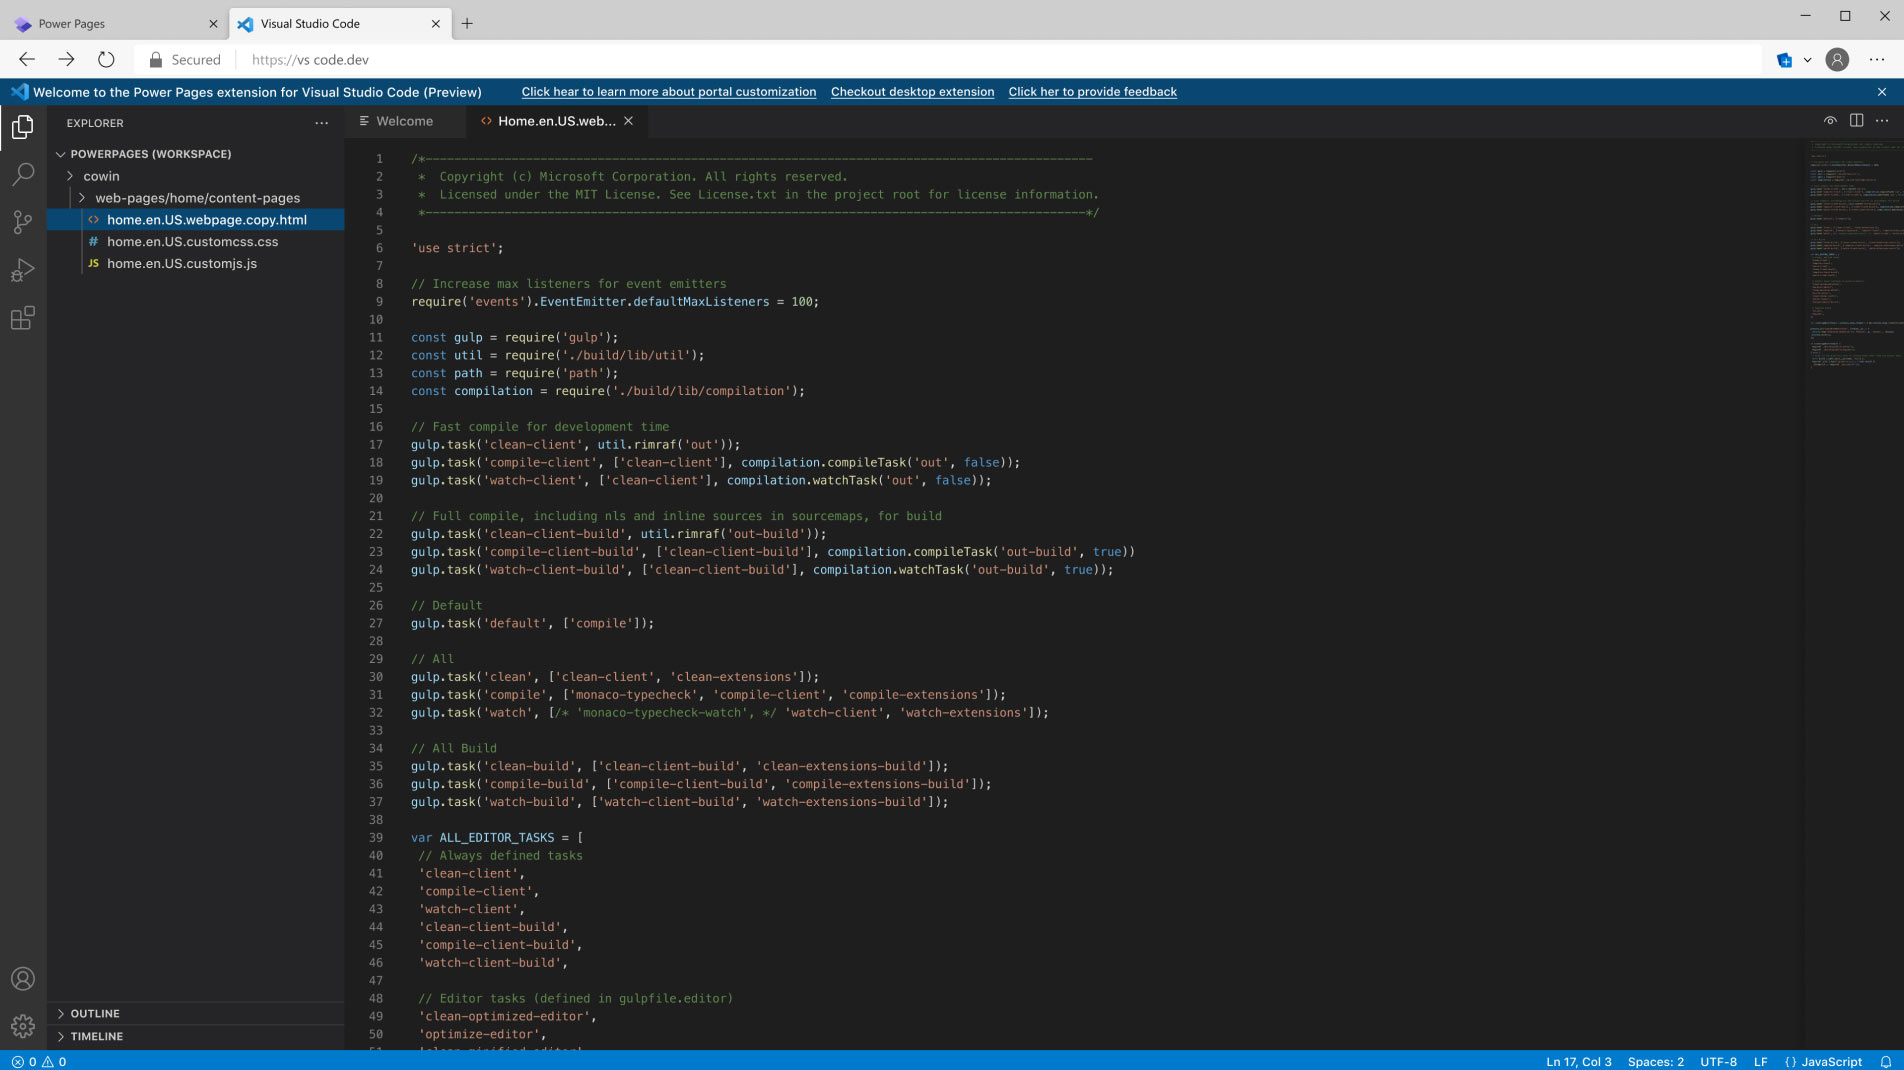 Visual Studio Code로 확장 기능이 있는 Power Pages 앱